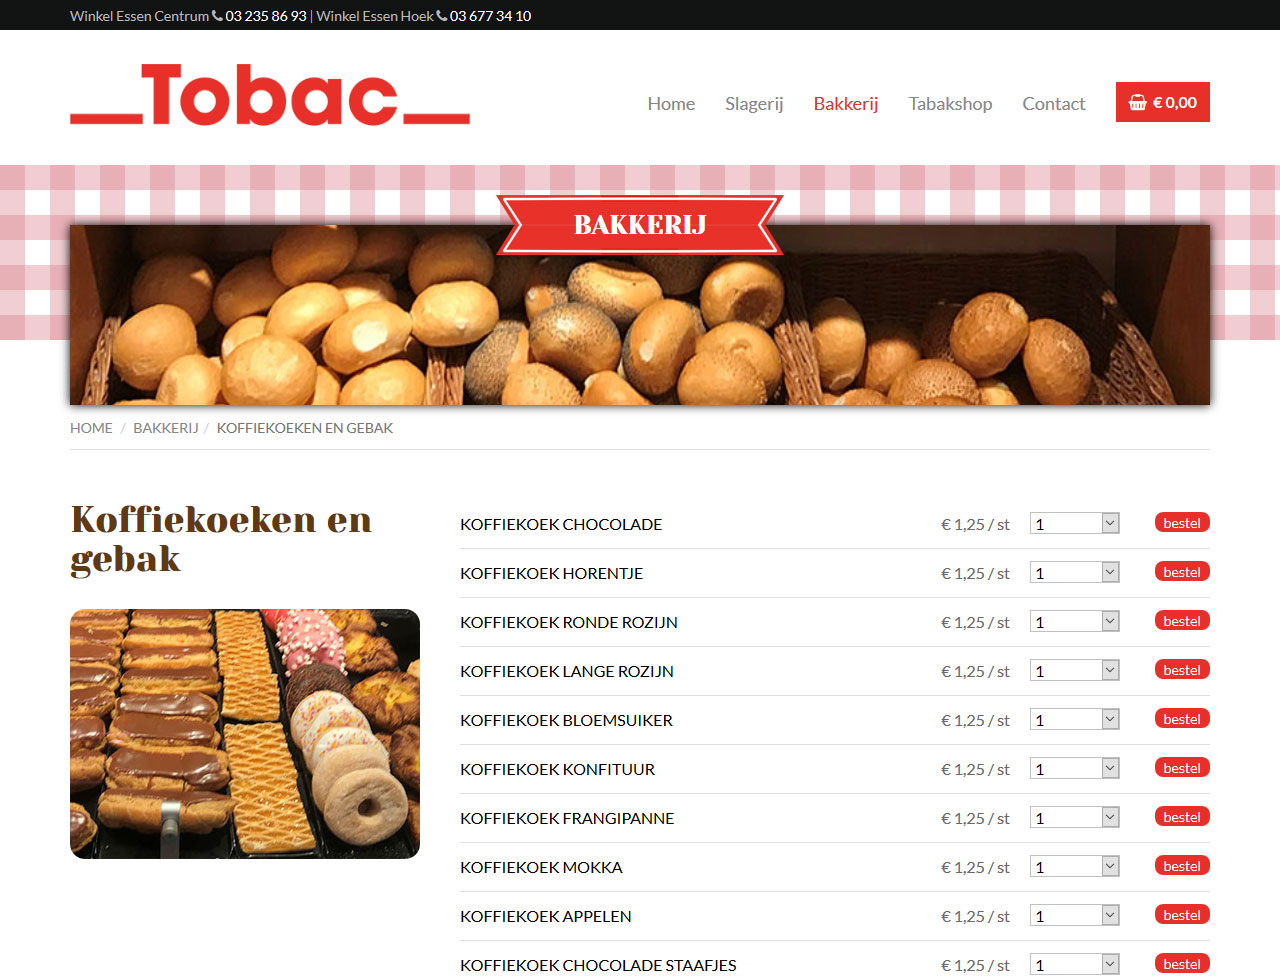 Slagerij - Bakkerij Tobac